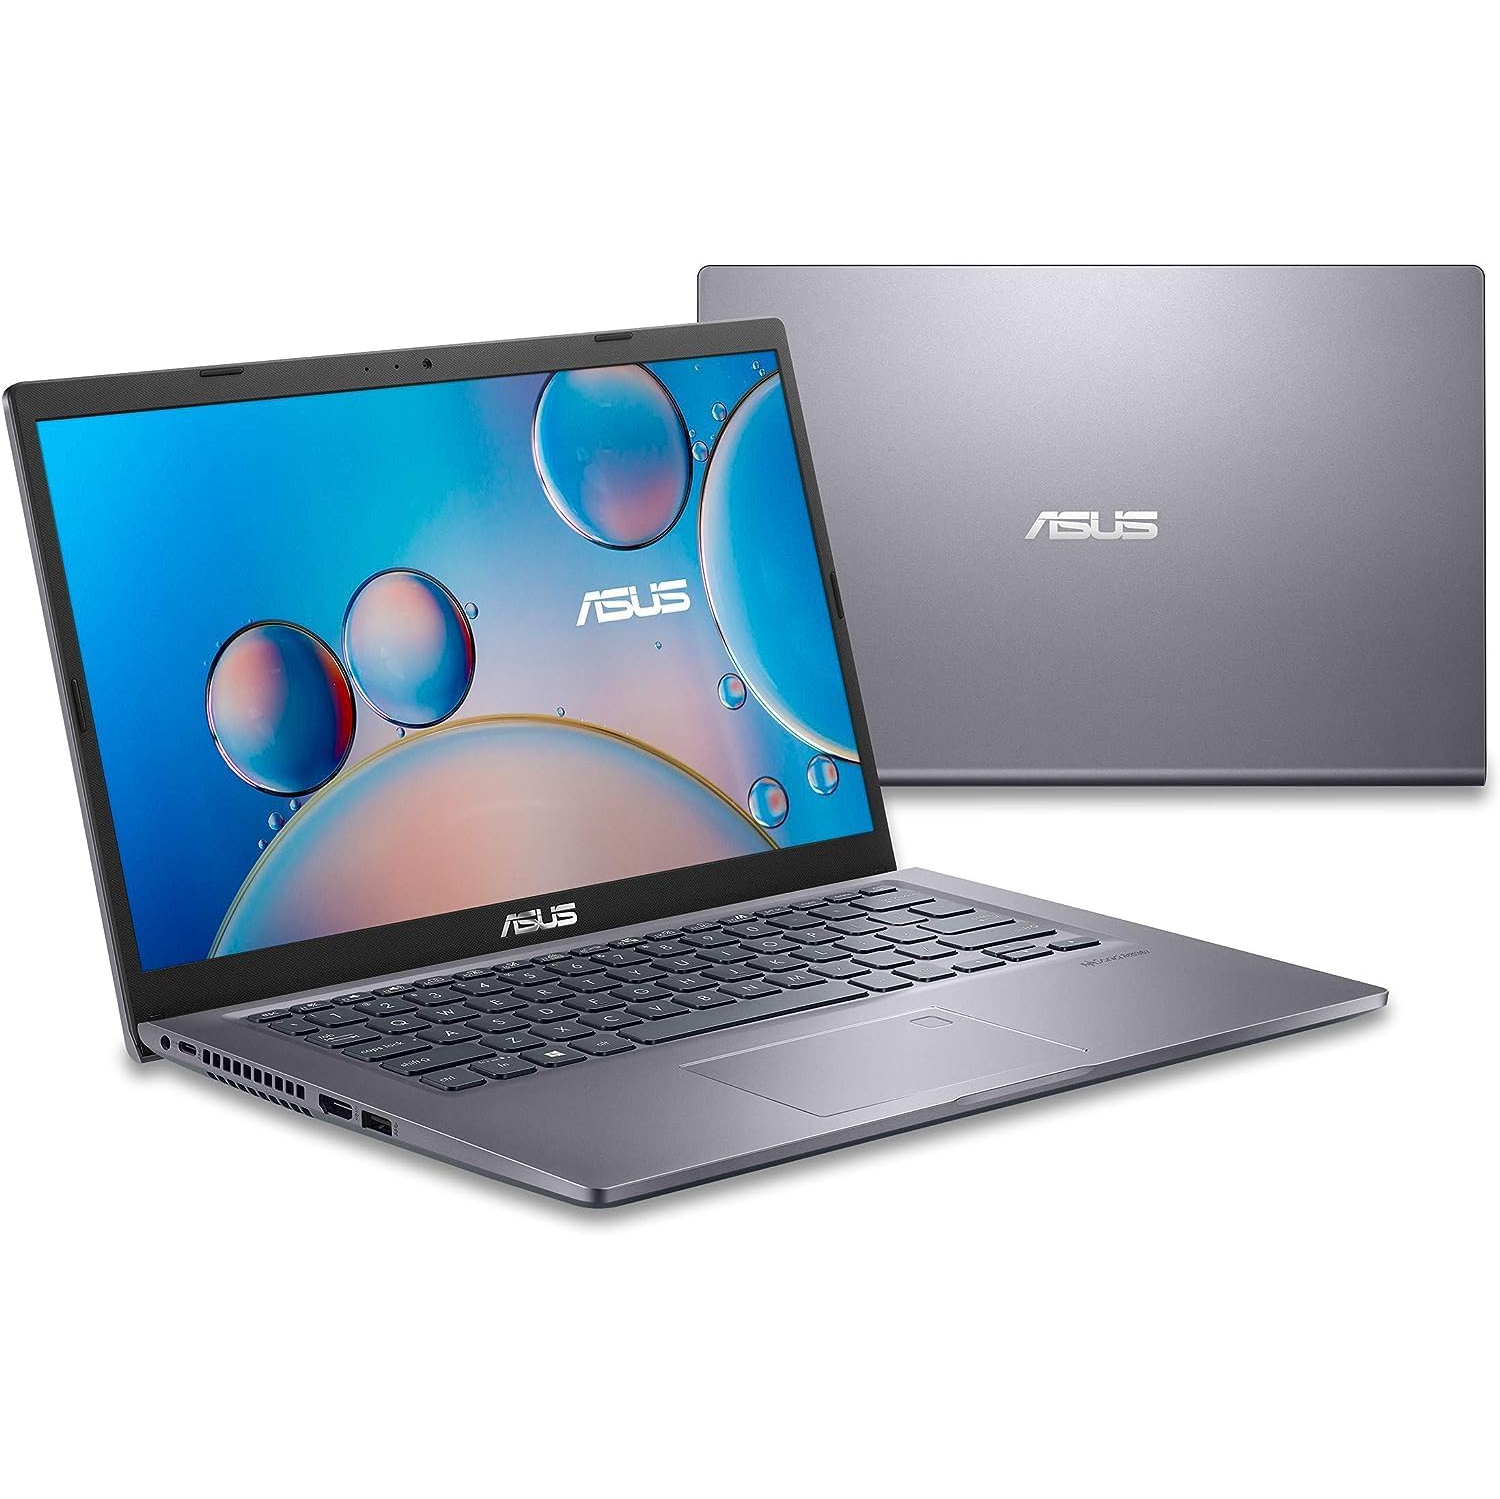 ASUS VivoBook 14 M415 Thin and Light Laptop, 14” FHD Display, AMD Ryzen 5 3500U, Radeon Vega 8 Graphics, 8GB RAM, 256GB PCIe SSD, Fingerprint, Windows 10 Home, M415DA-AS51-CA